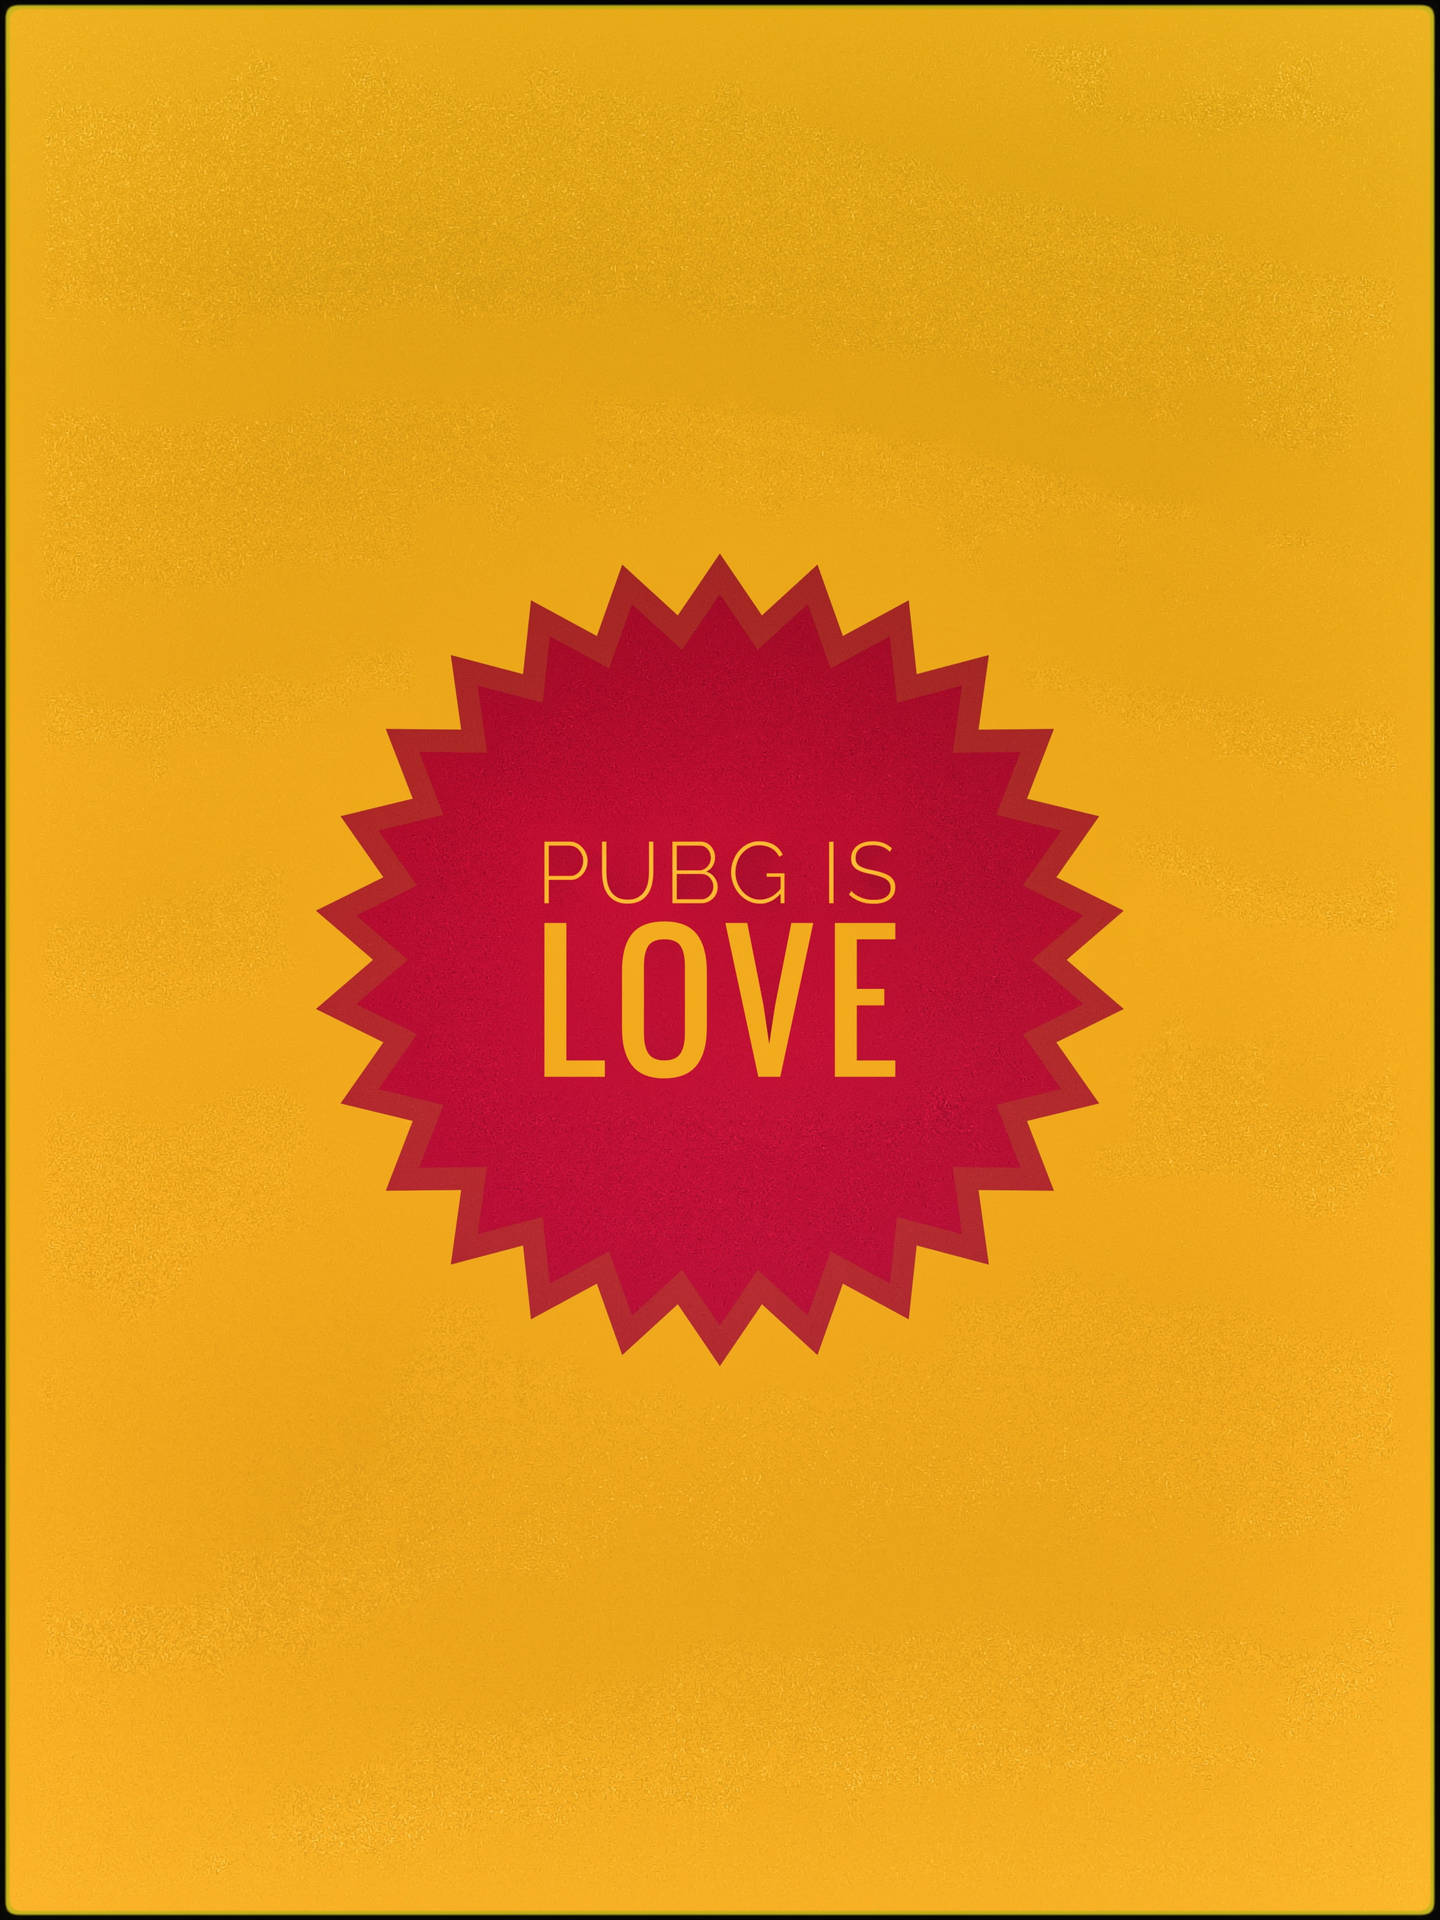 PUBG Lover PUBG Is Love Wallpaper